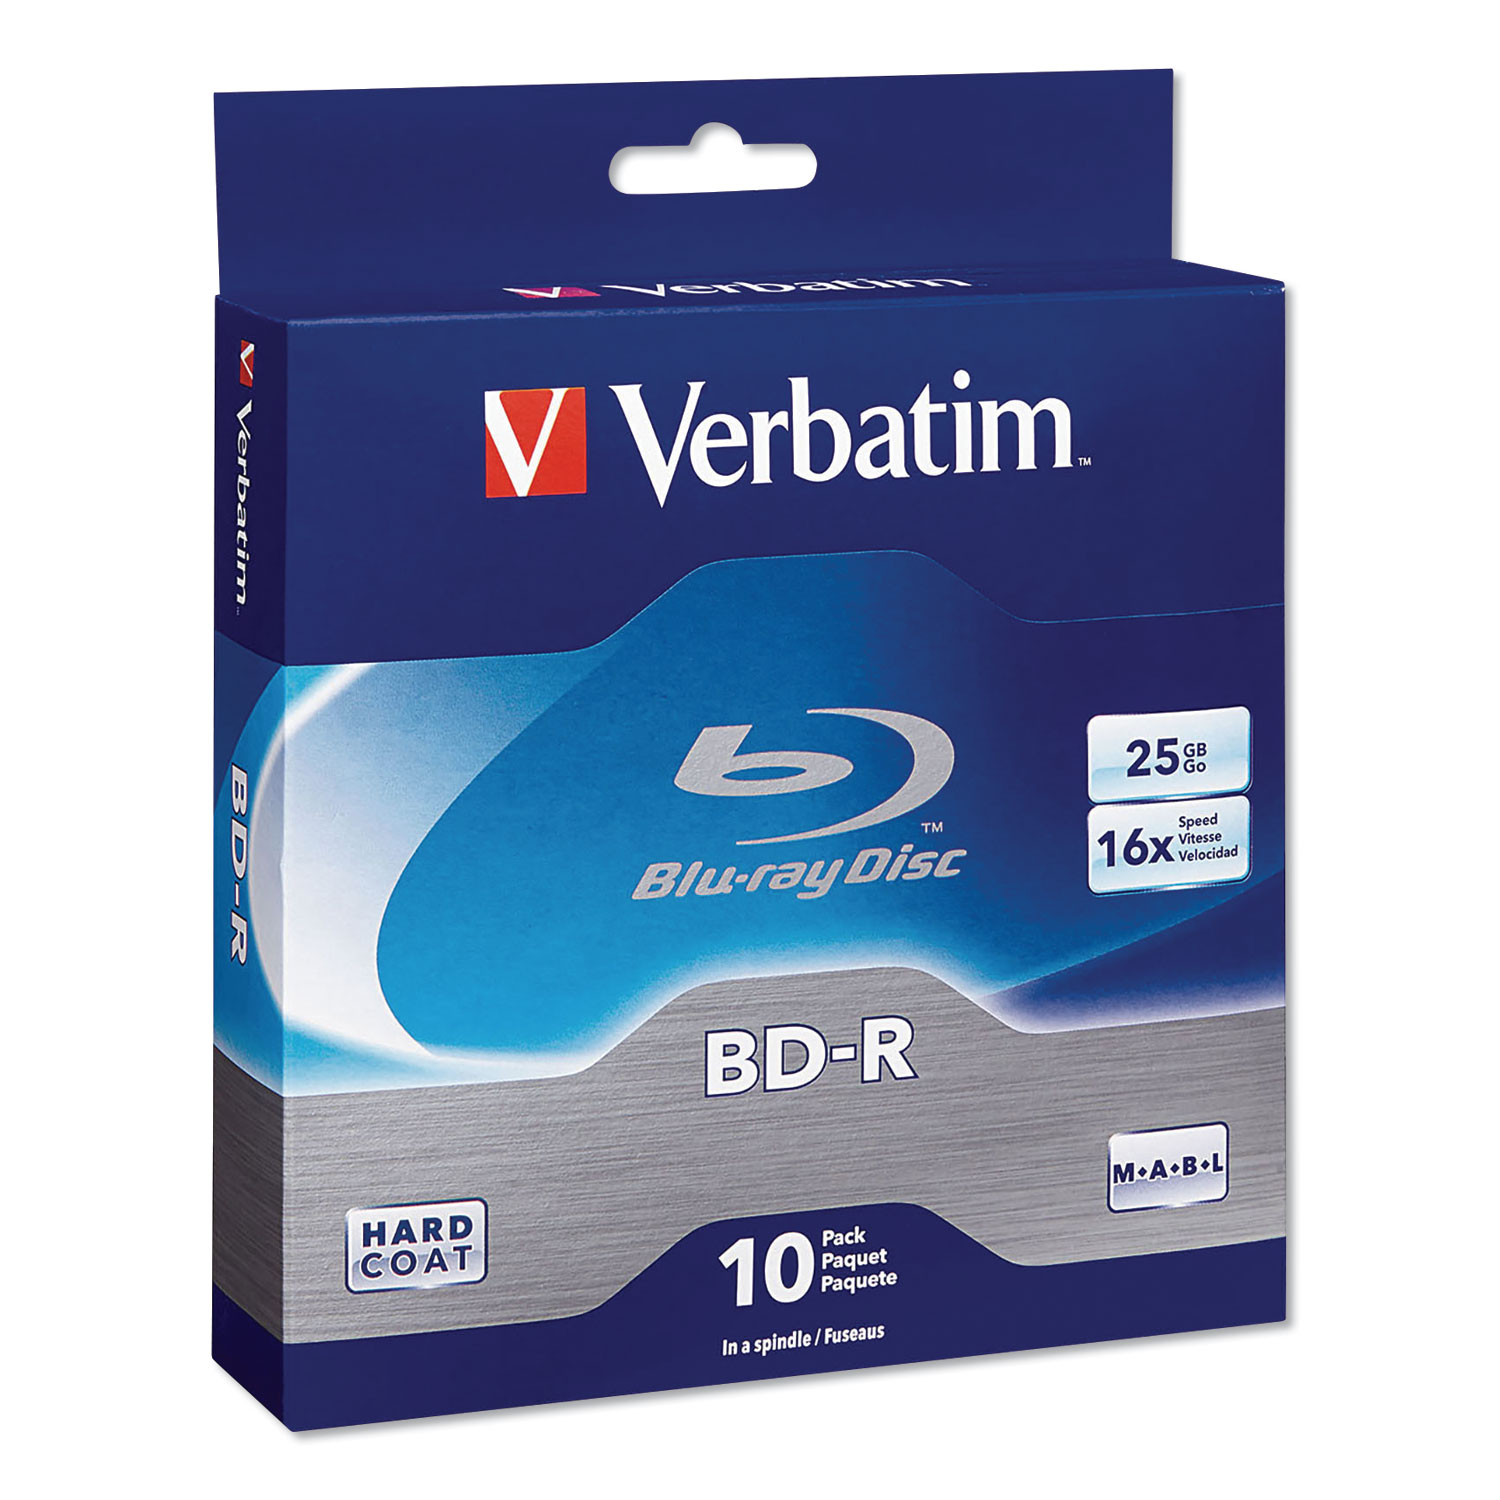  Verbatim 97238 BD-R Blu-Ray Disc, 25GB, 16x, 10/Pk (VER97238) 